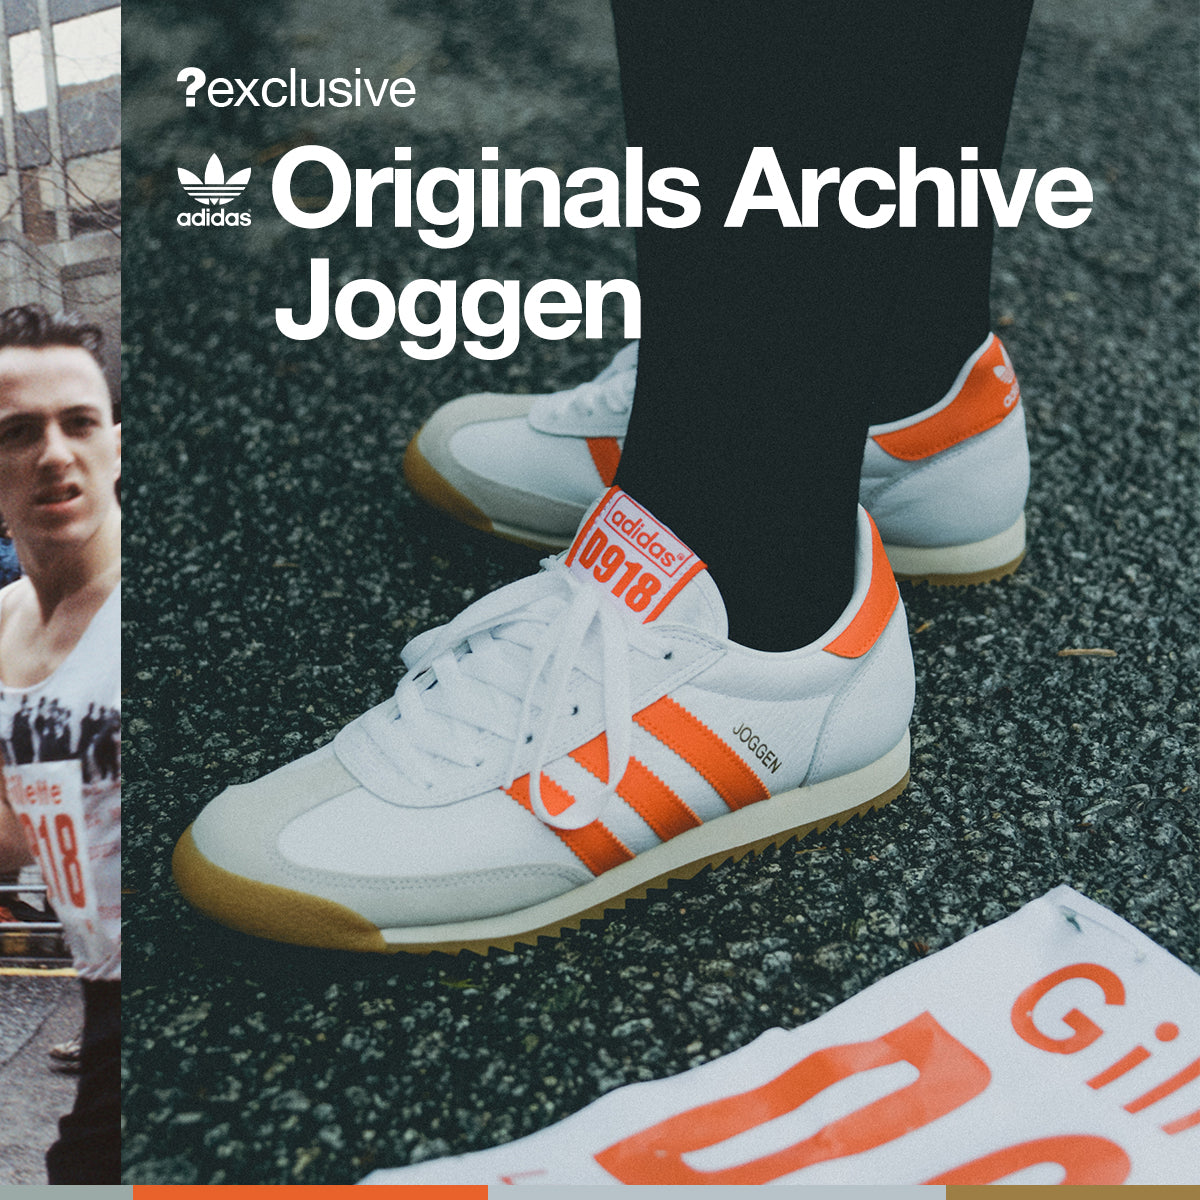 adidas Originals Archive Joggen - size? Exclusive